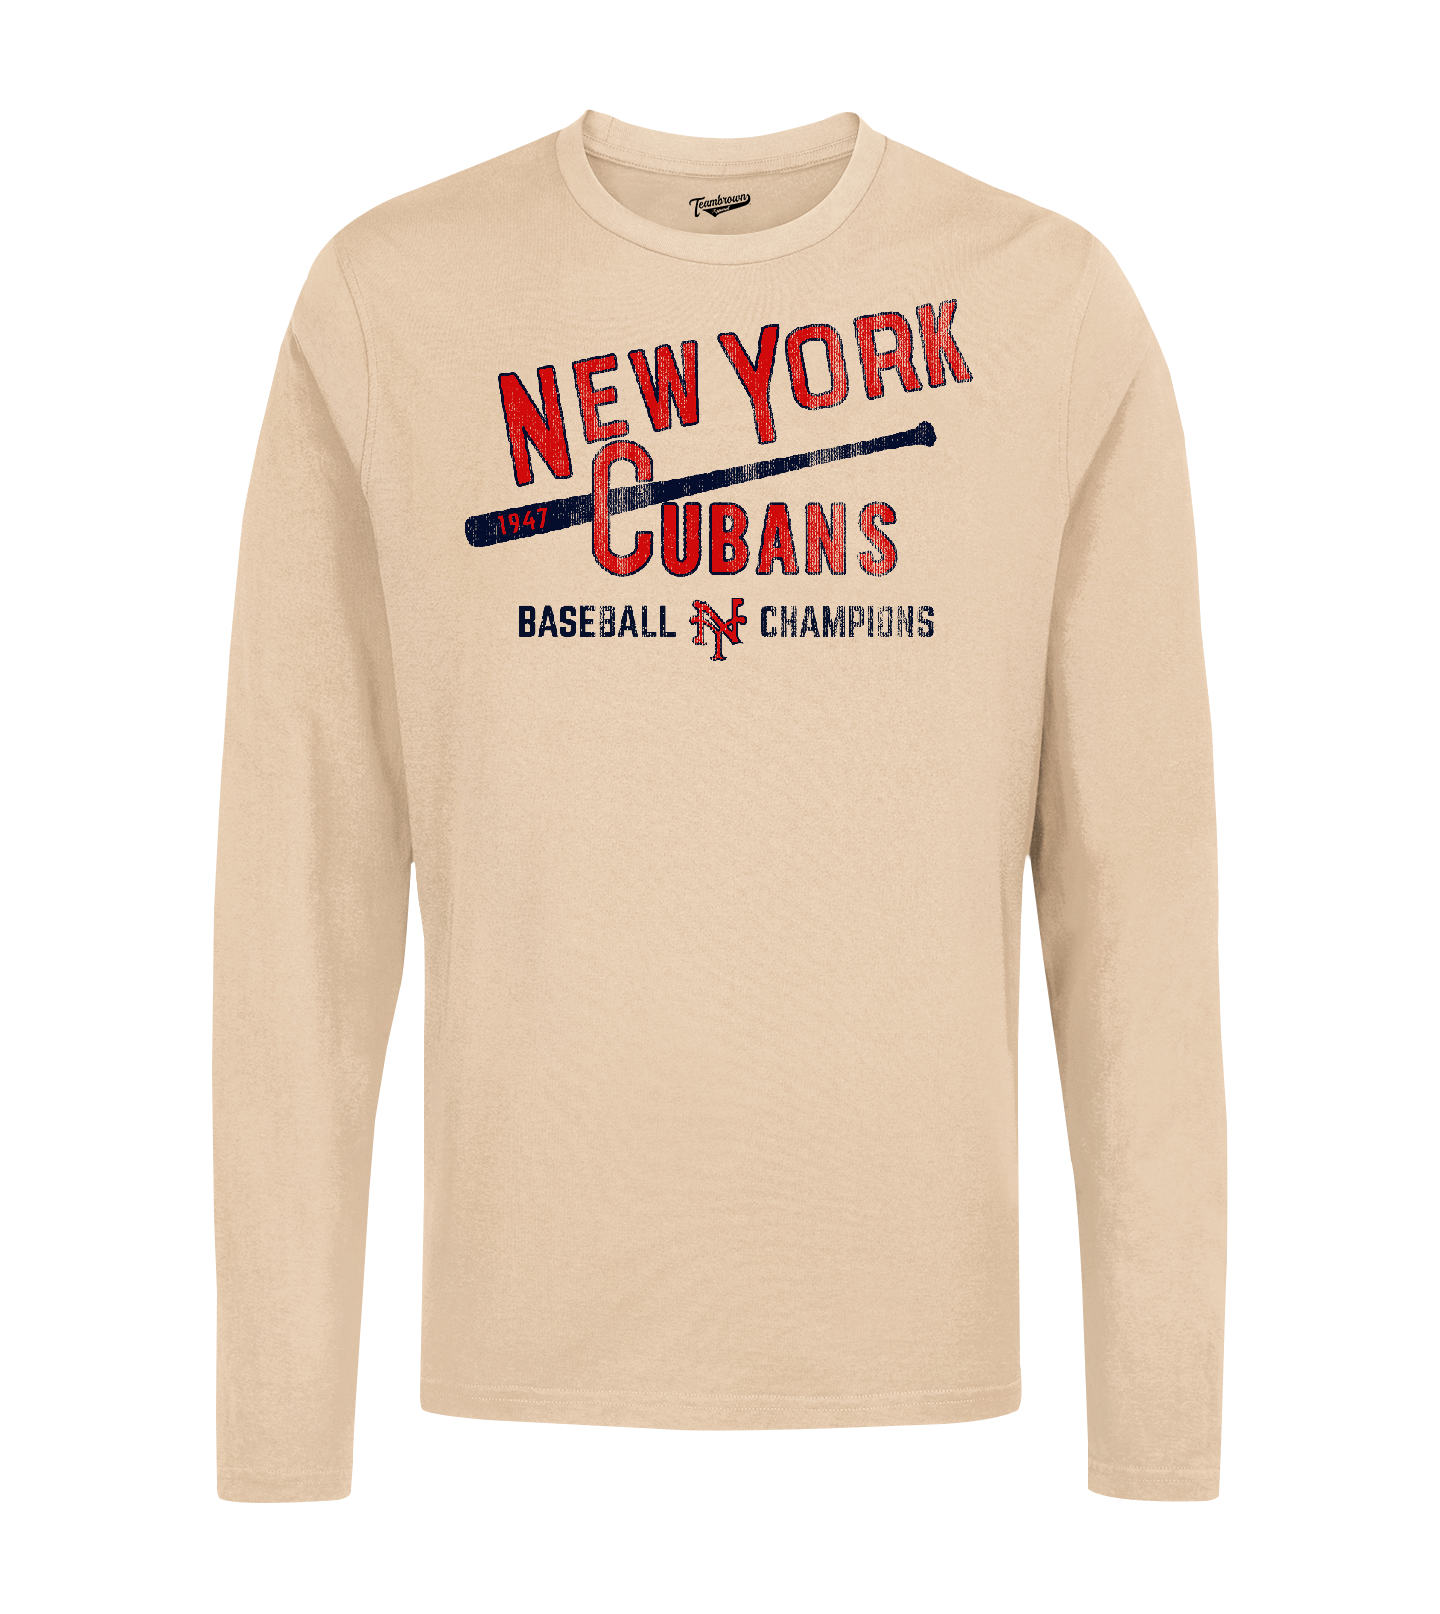 1947 Champions - New York Cubans - Unisex Long Sleeve Crew T-Shirt | Officially Licensed - NLBM